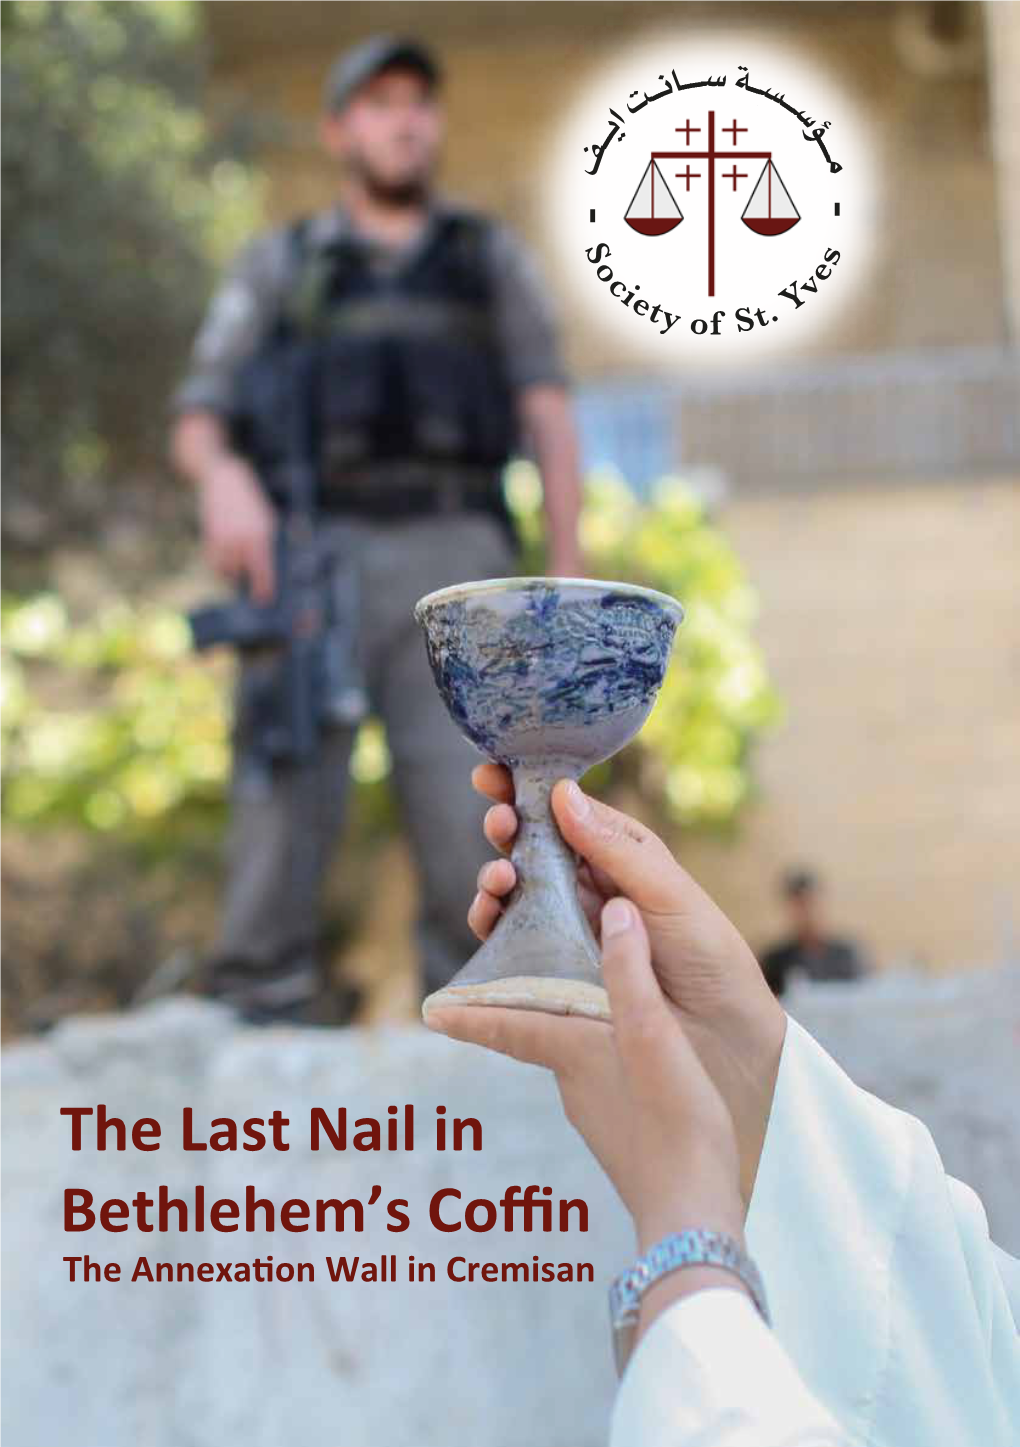 The Last Nail in Bethlehem's Coffin